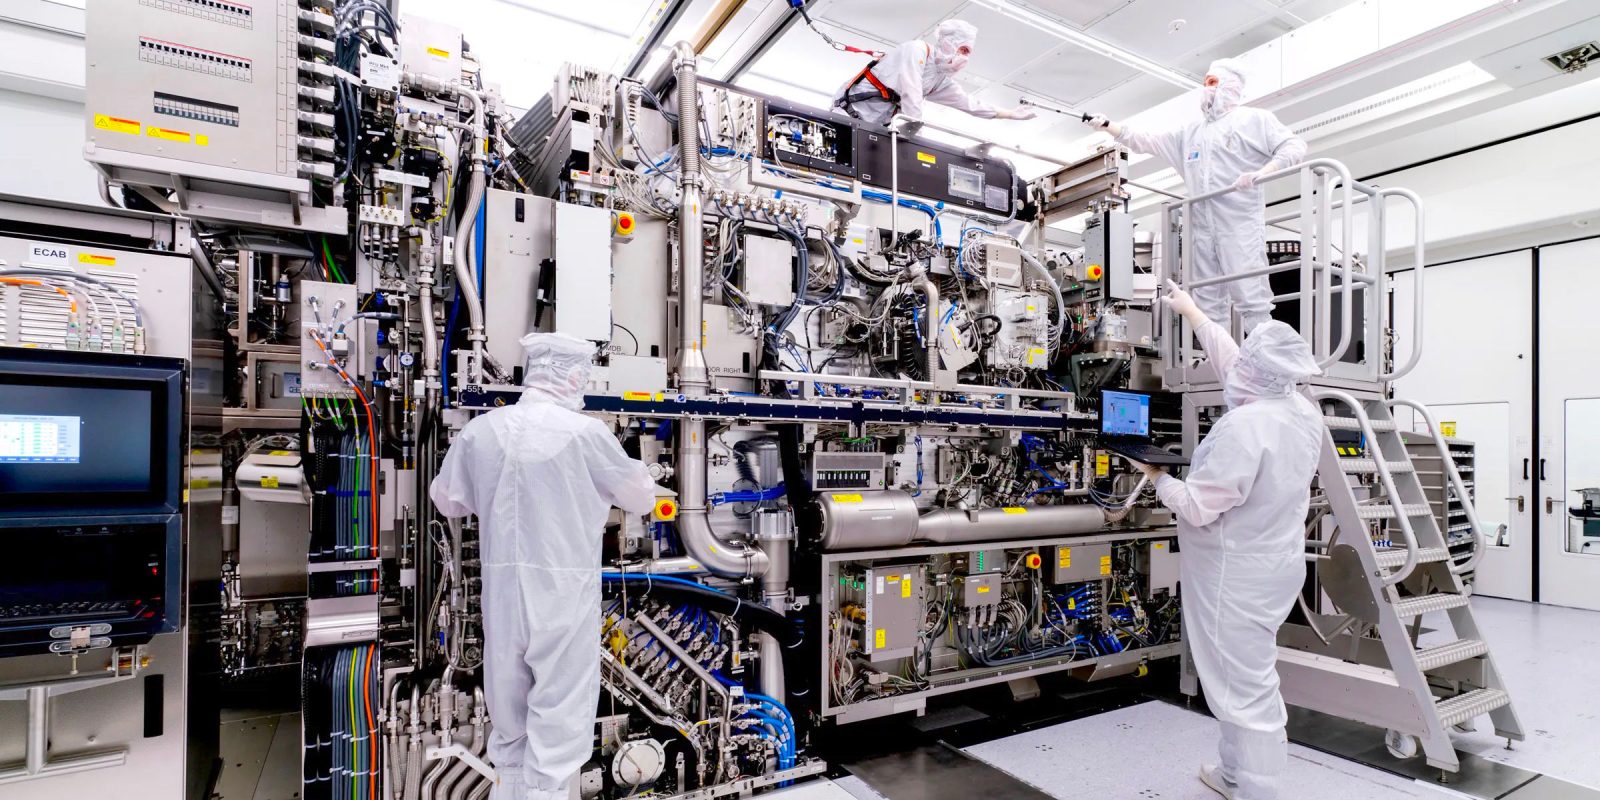 ASML makes Crucial chipmaking machines